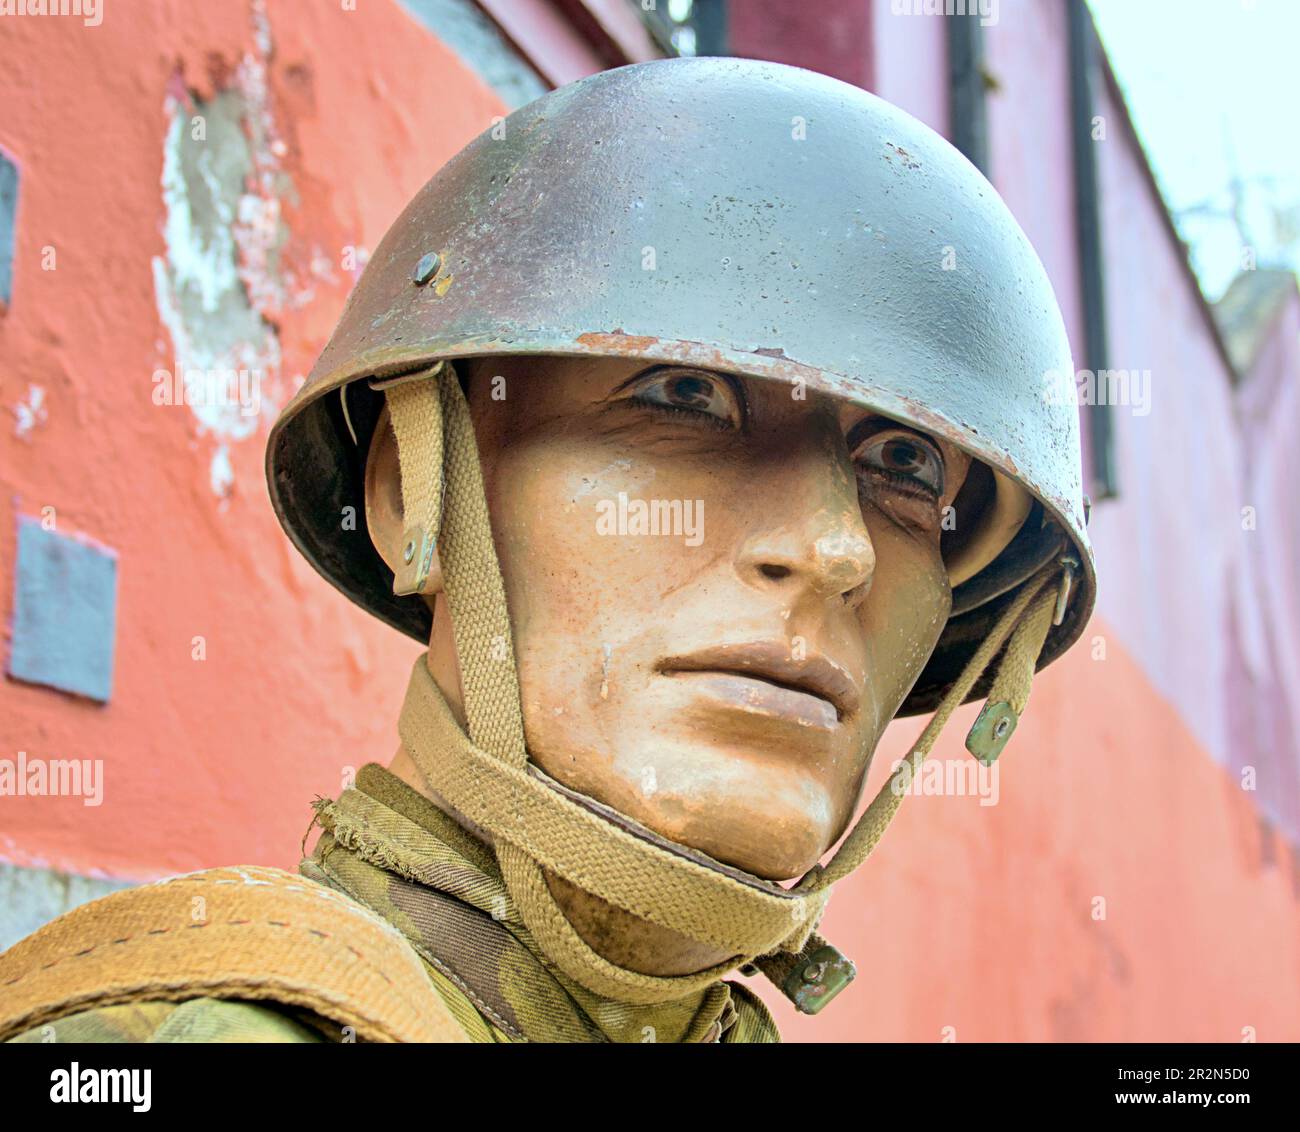 soldier dummy in an old tin helmet ar barras flea market Stock Photo